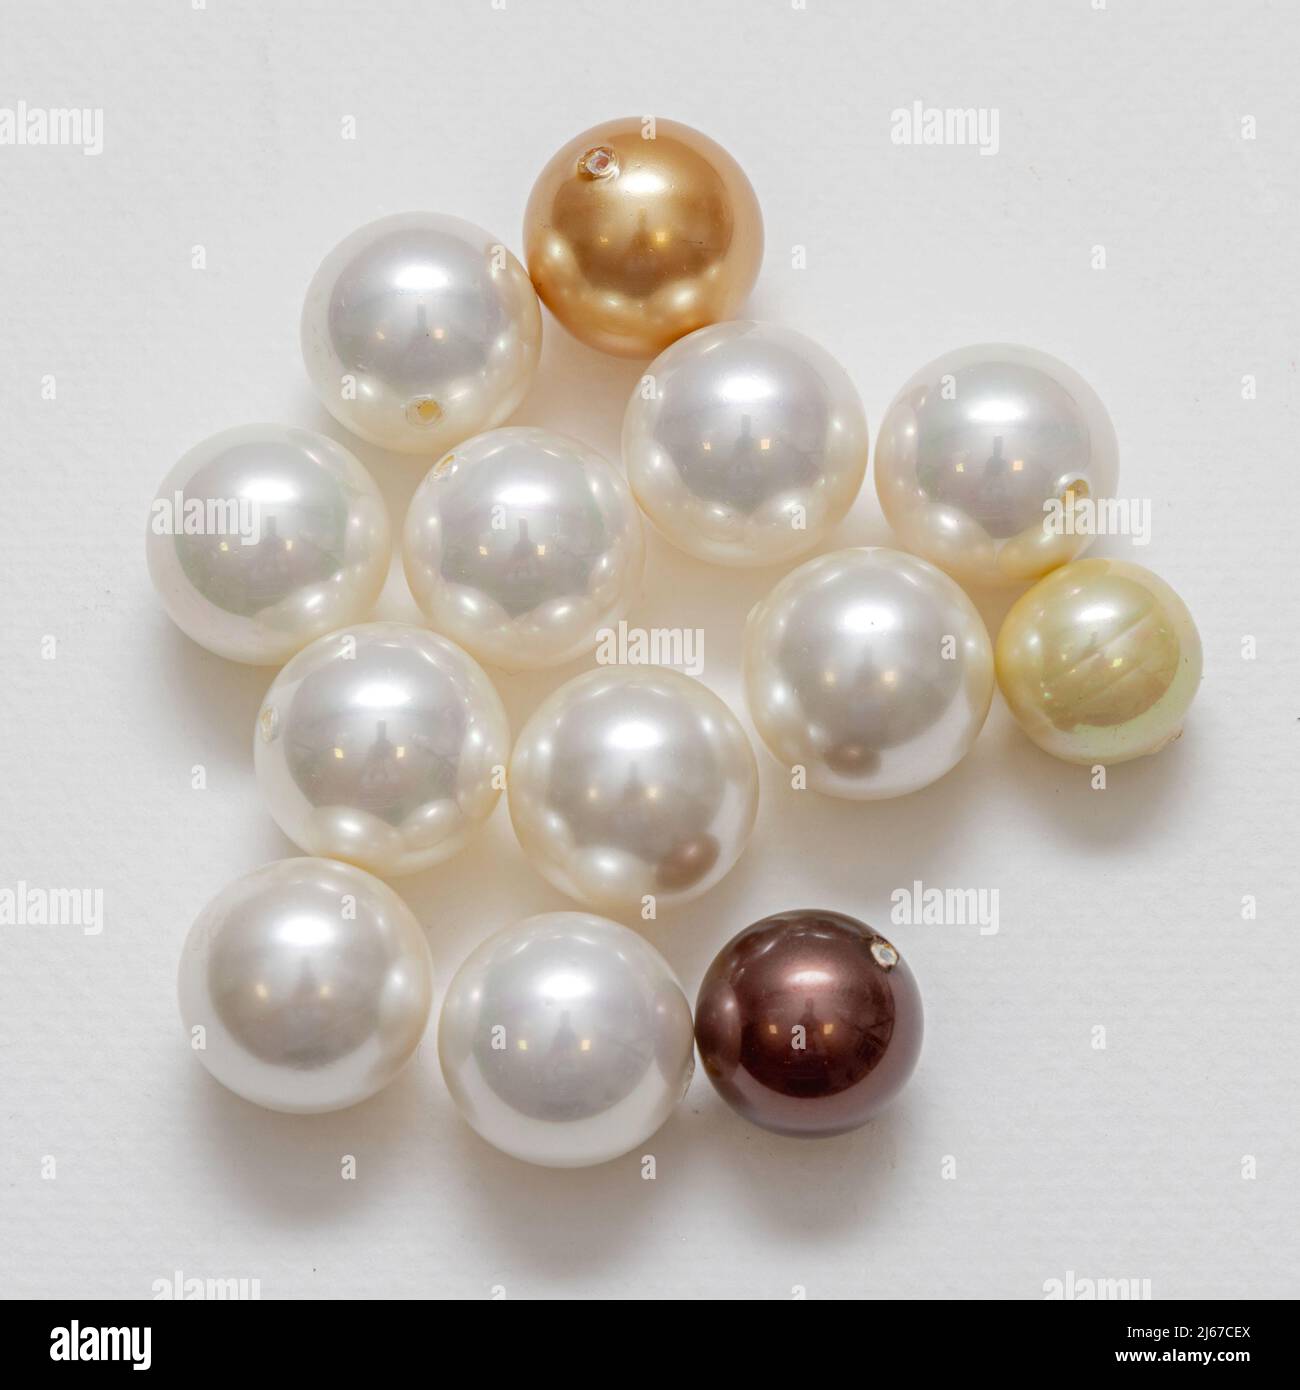 Fake Pearls Made Plastic Imitation Jewelry Stock Photo 243846517